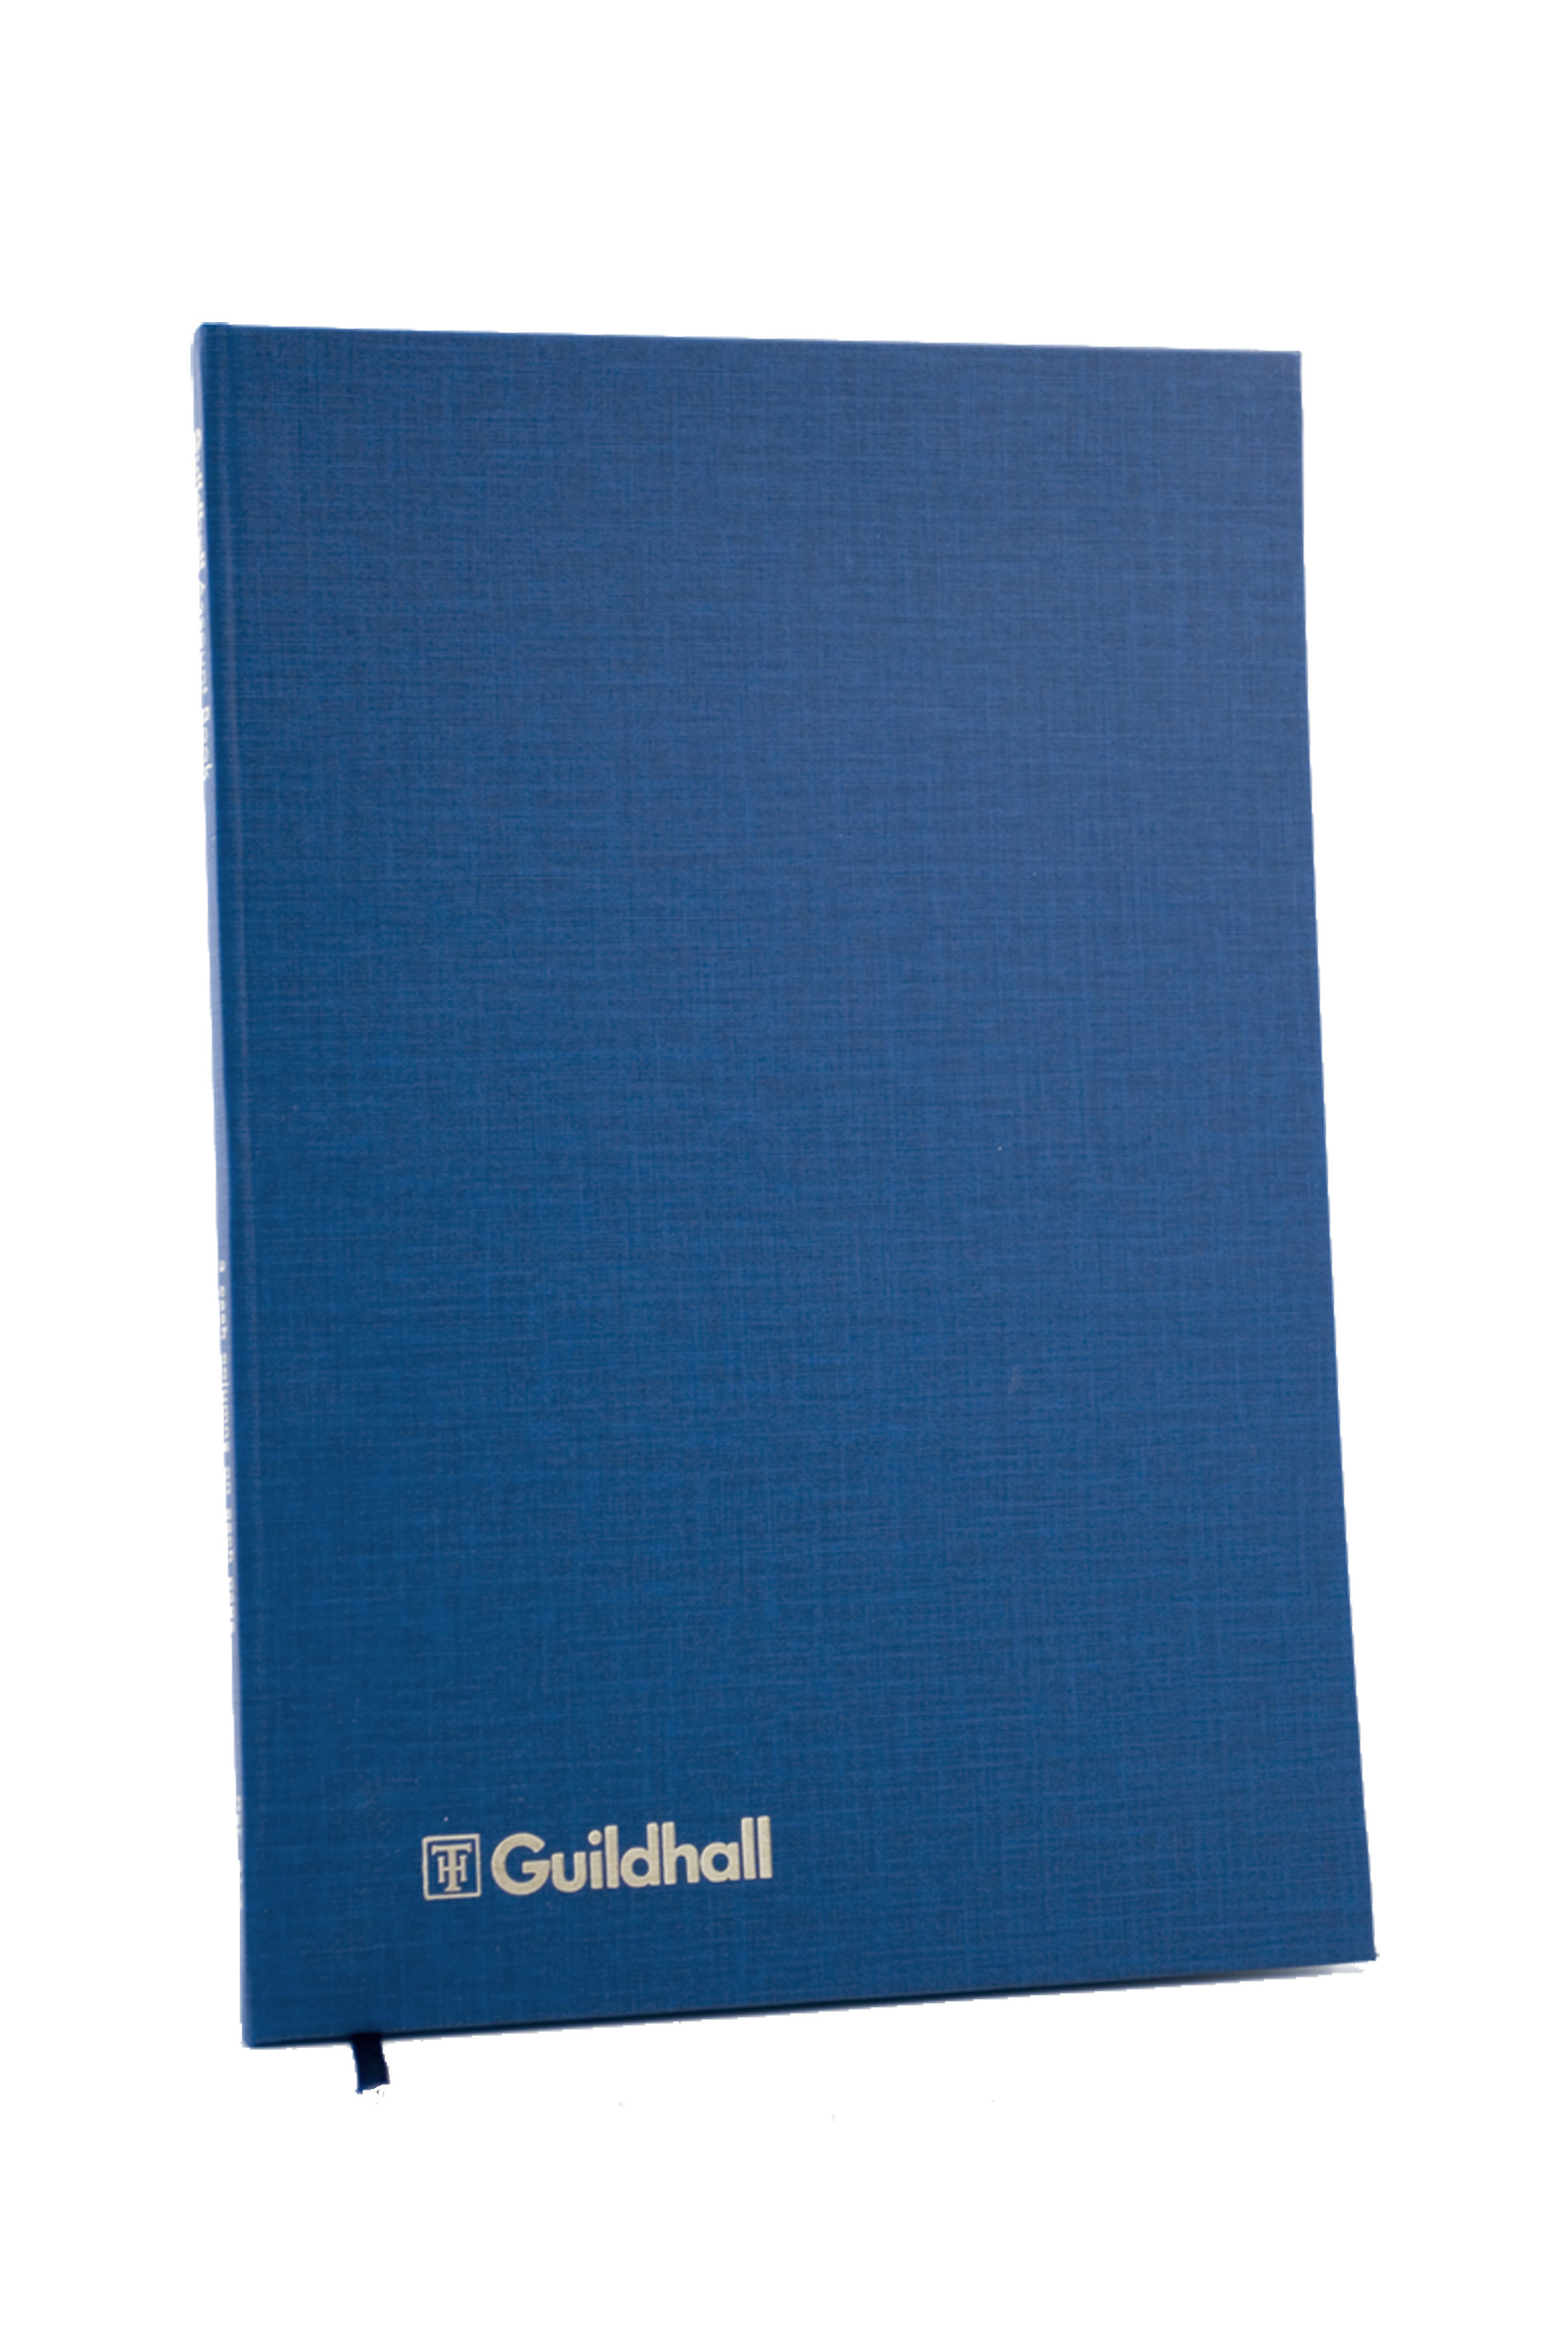 Guildhall Account Book 7 Column 80 Leaf